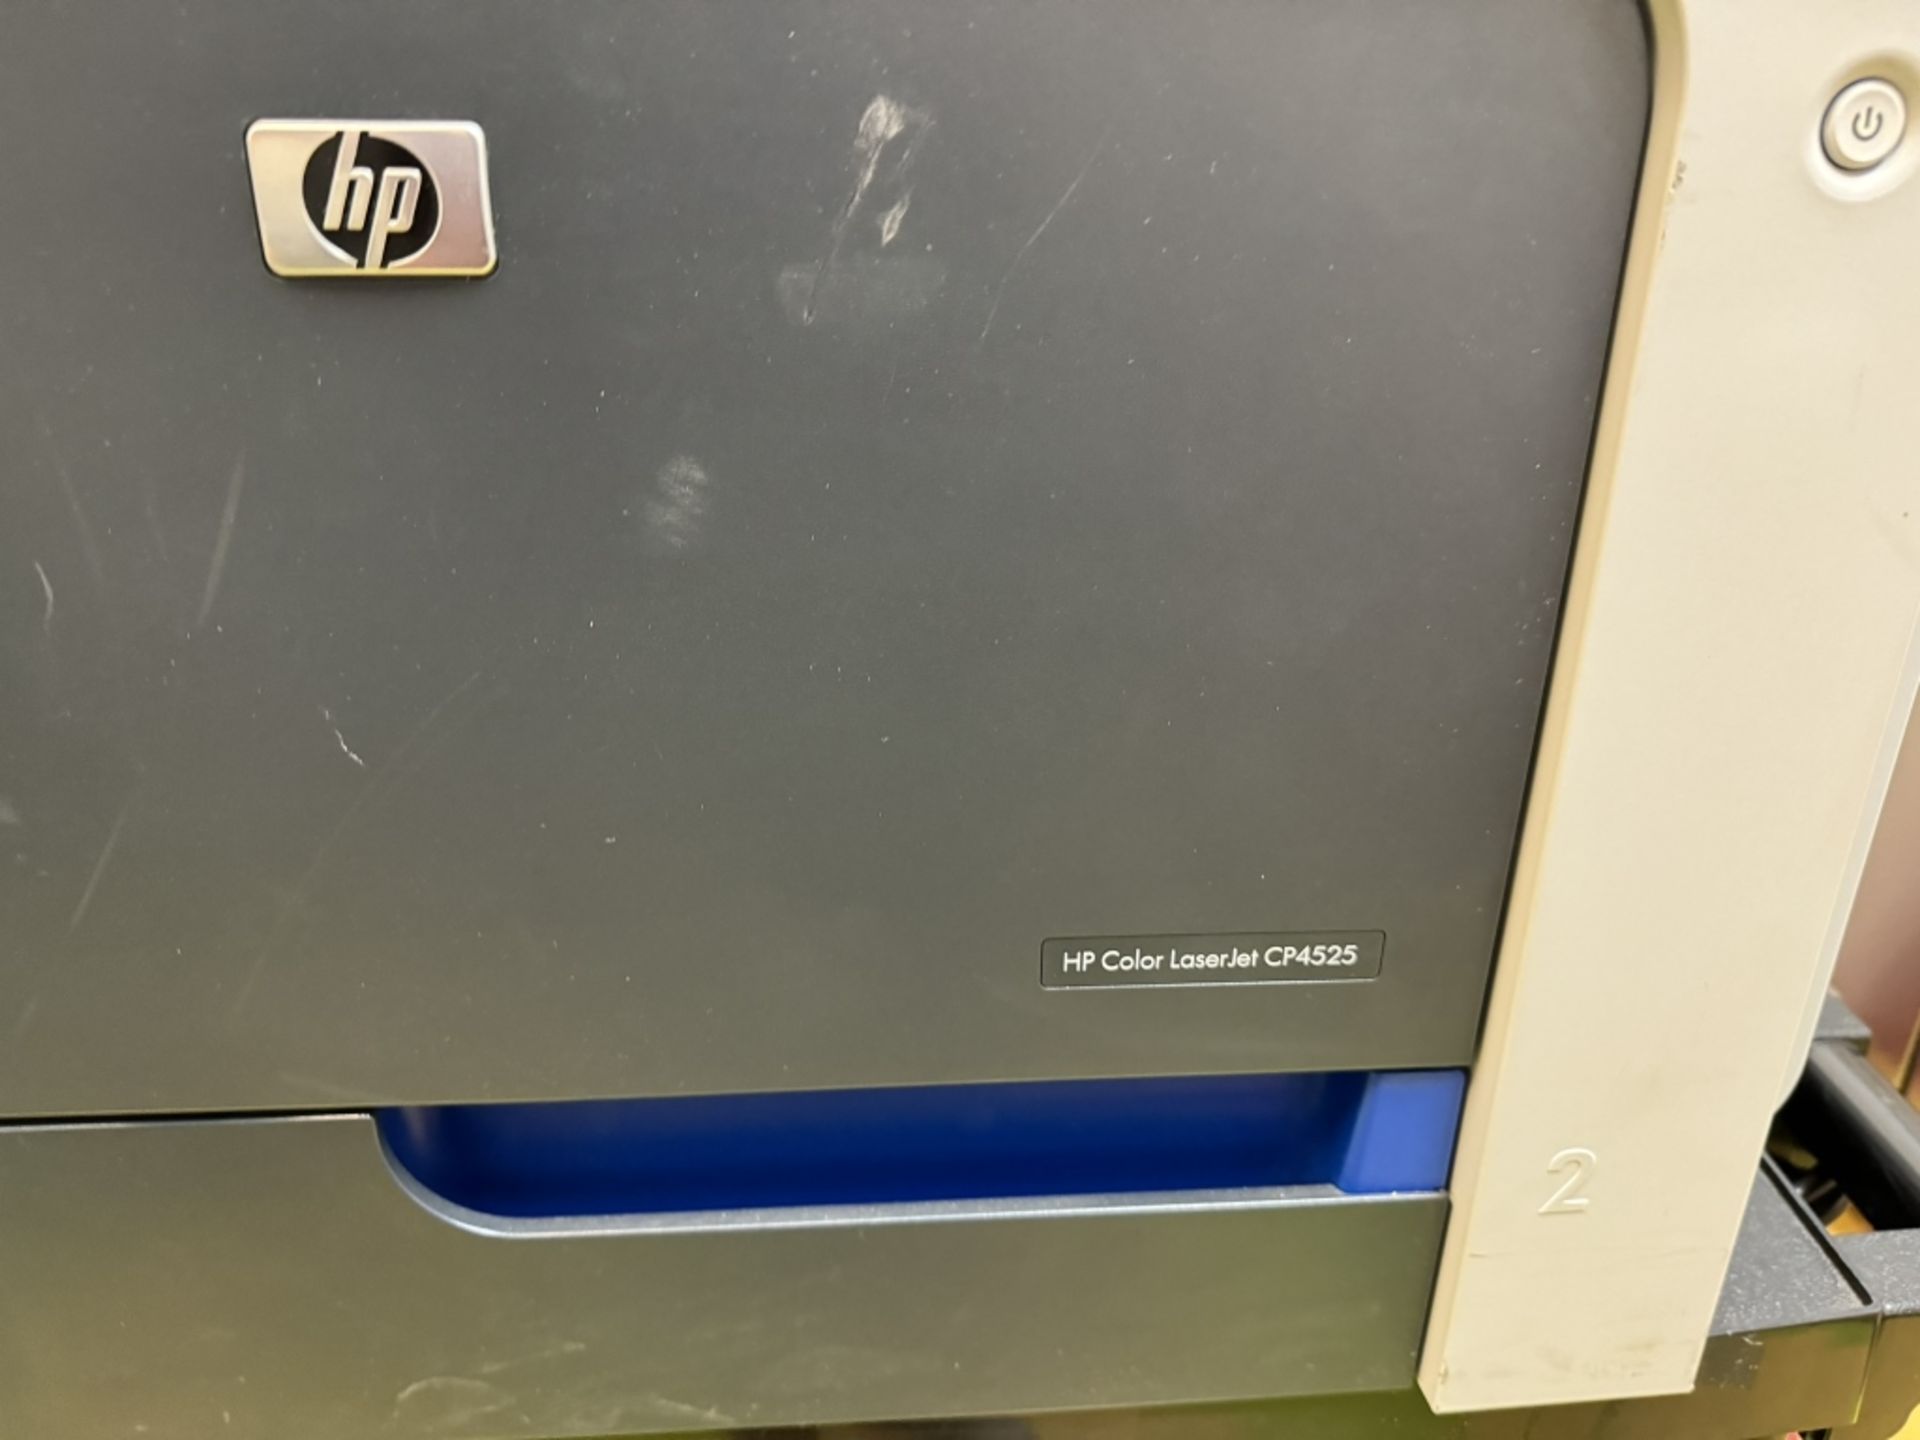 HP color LaserJet cp4525 workgroup printer - Image 2 of 5